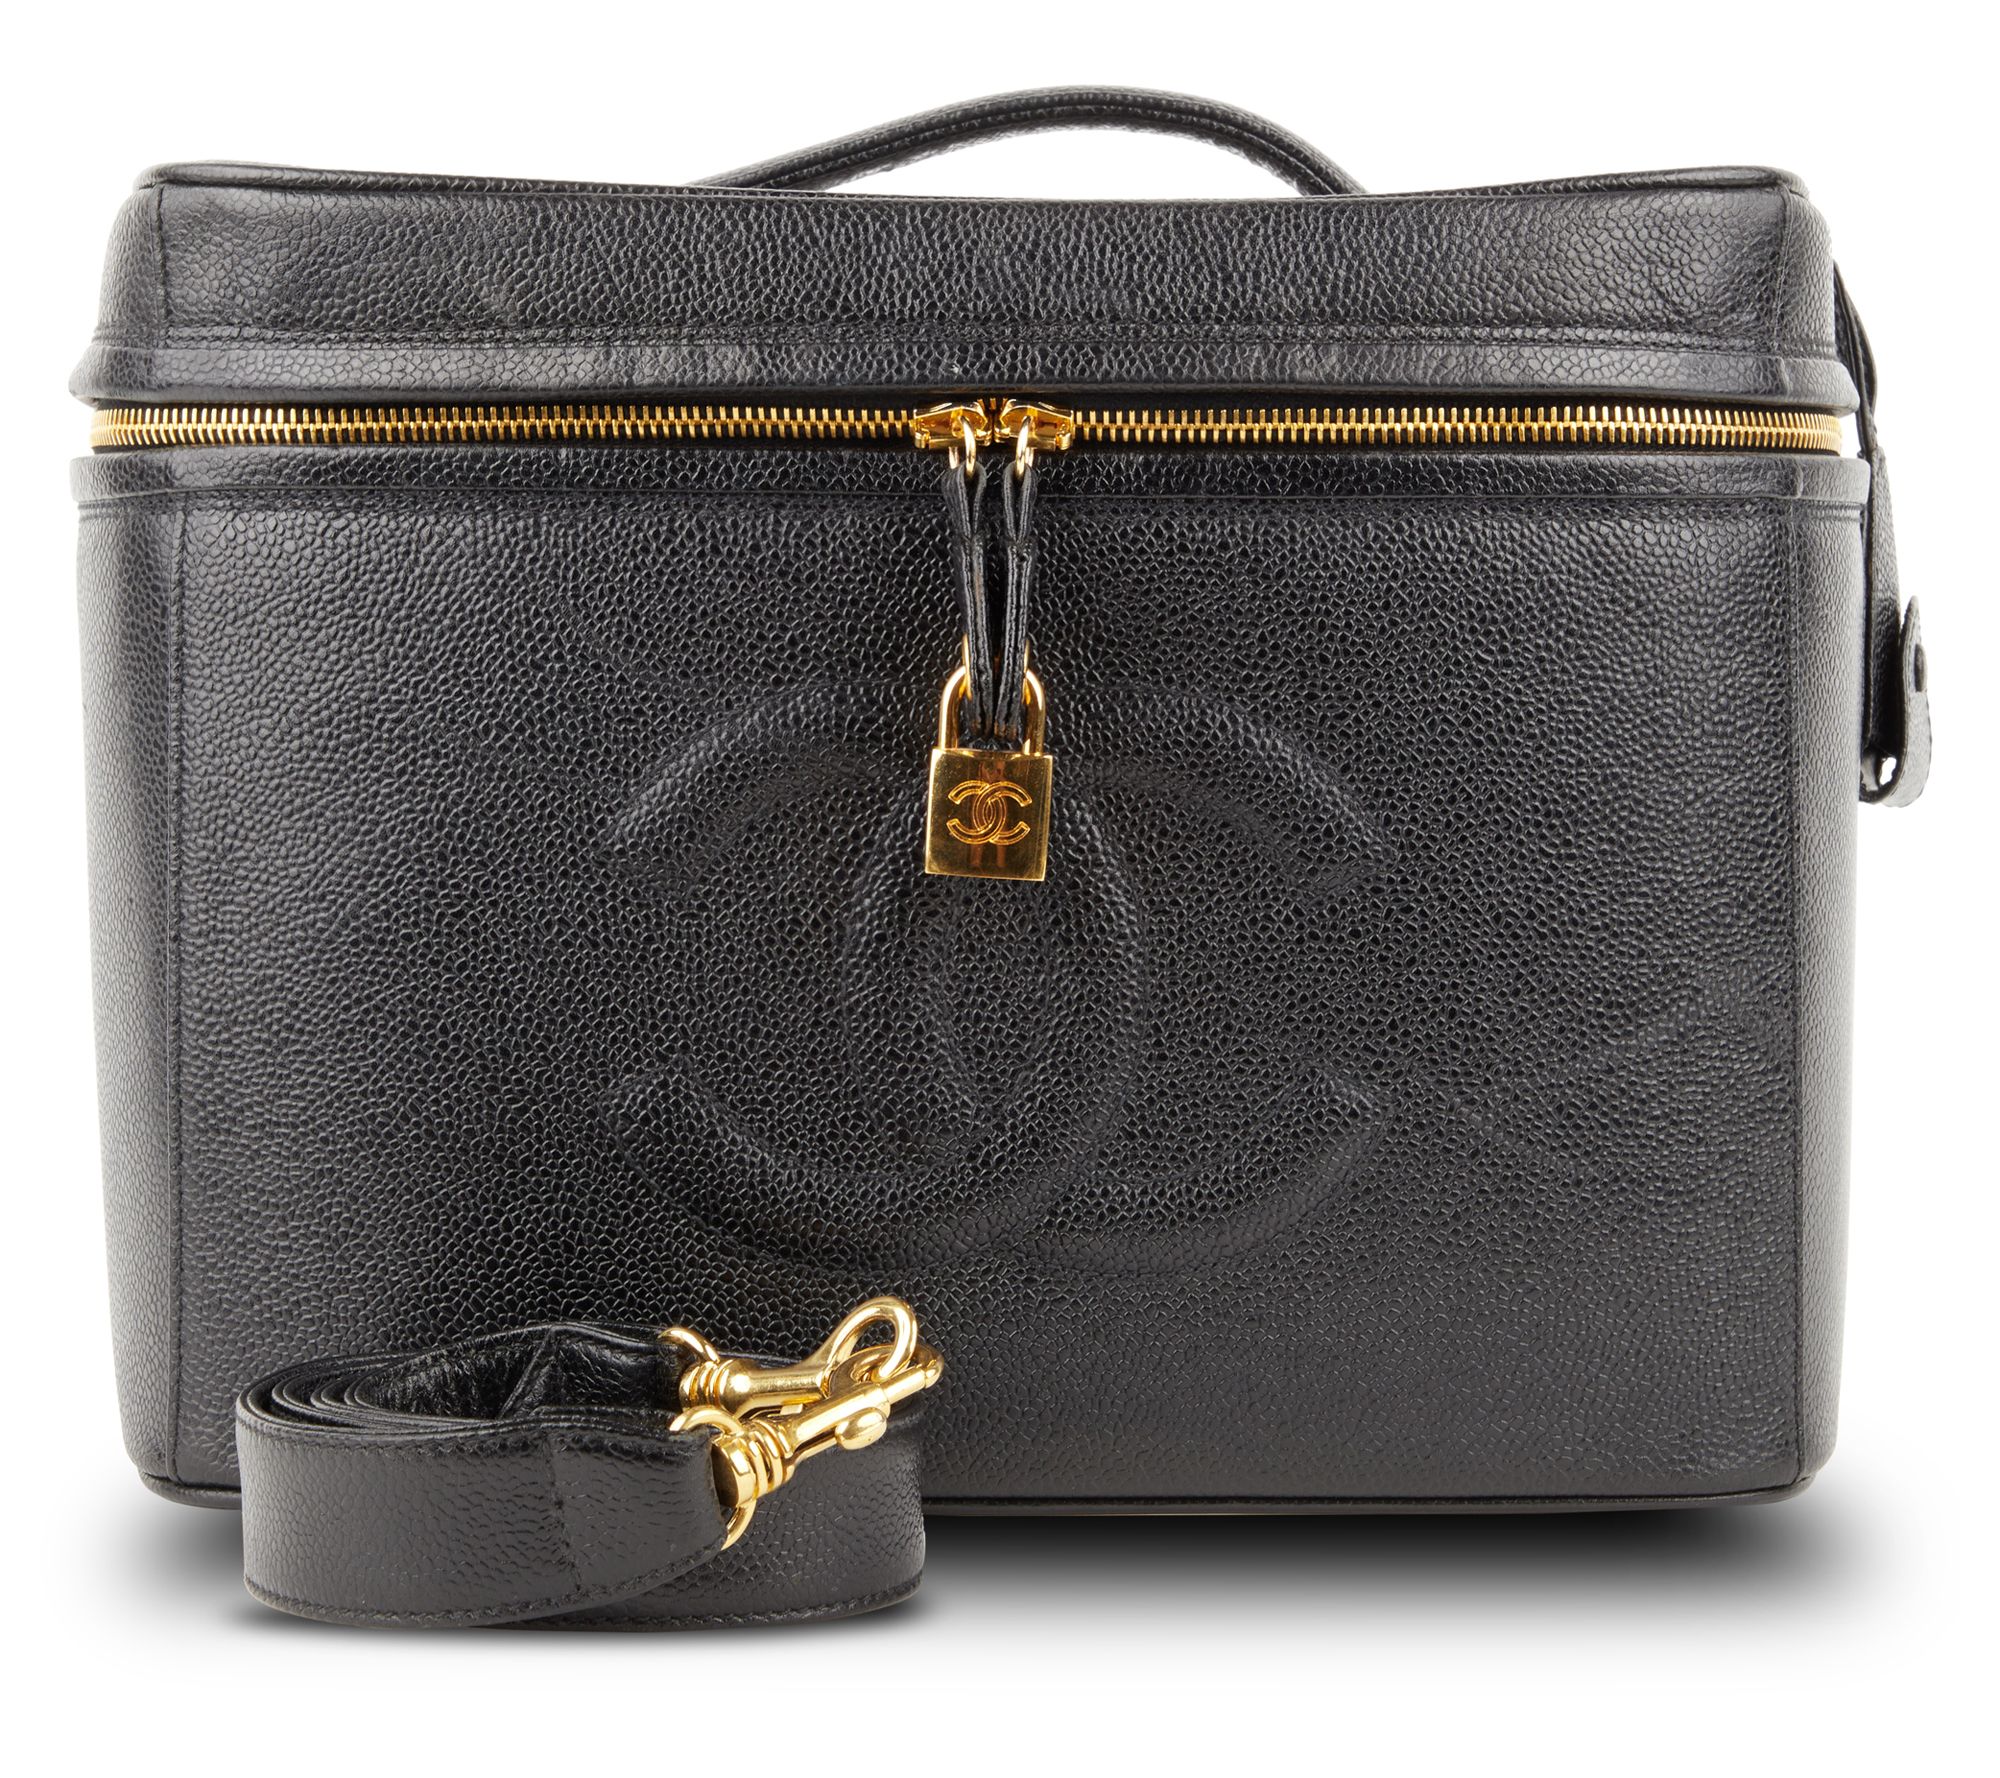 Chanel Caviar Travel Makeup Vanity Bag in Black | Lord & Taylor